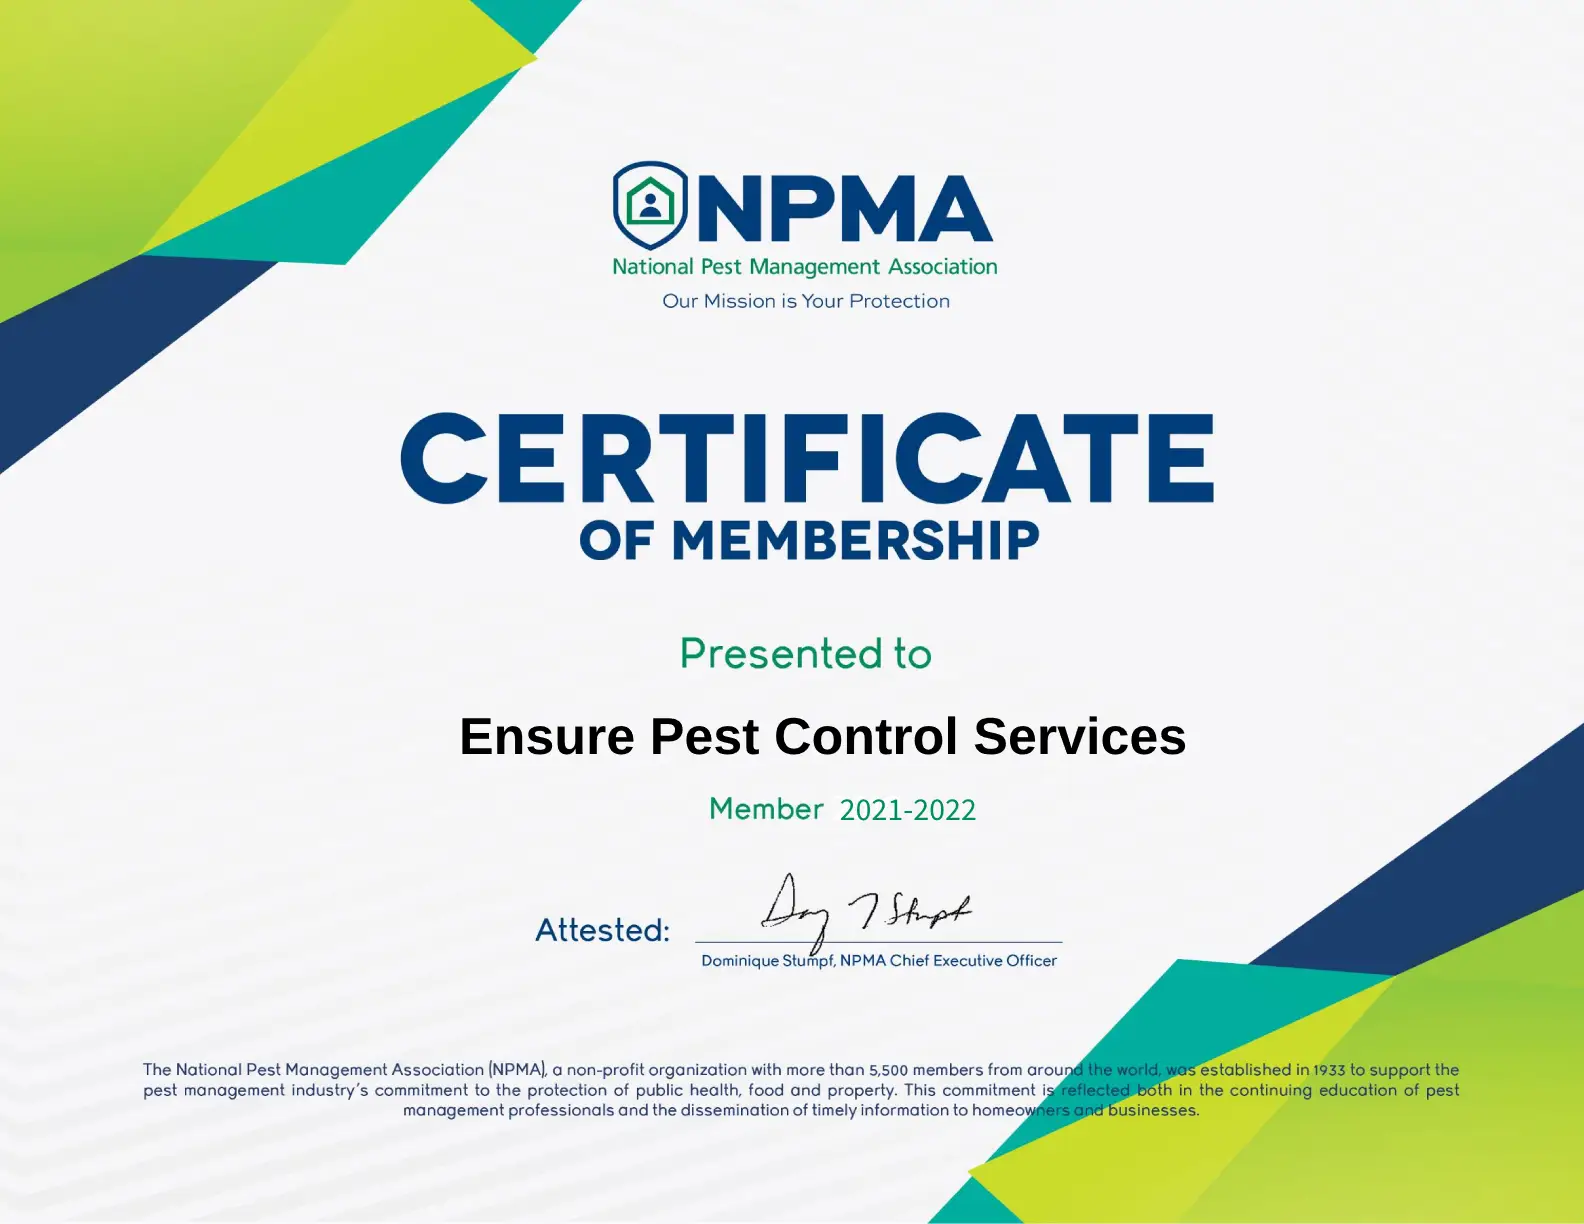 NPMA Certifications in Pest Control - Ensure